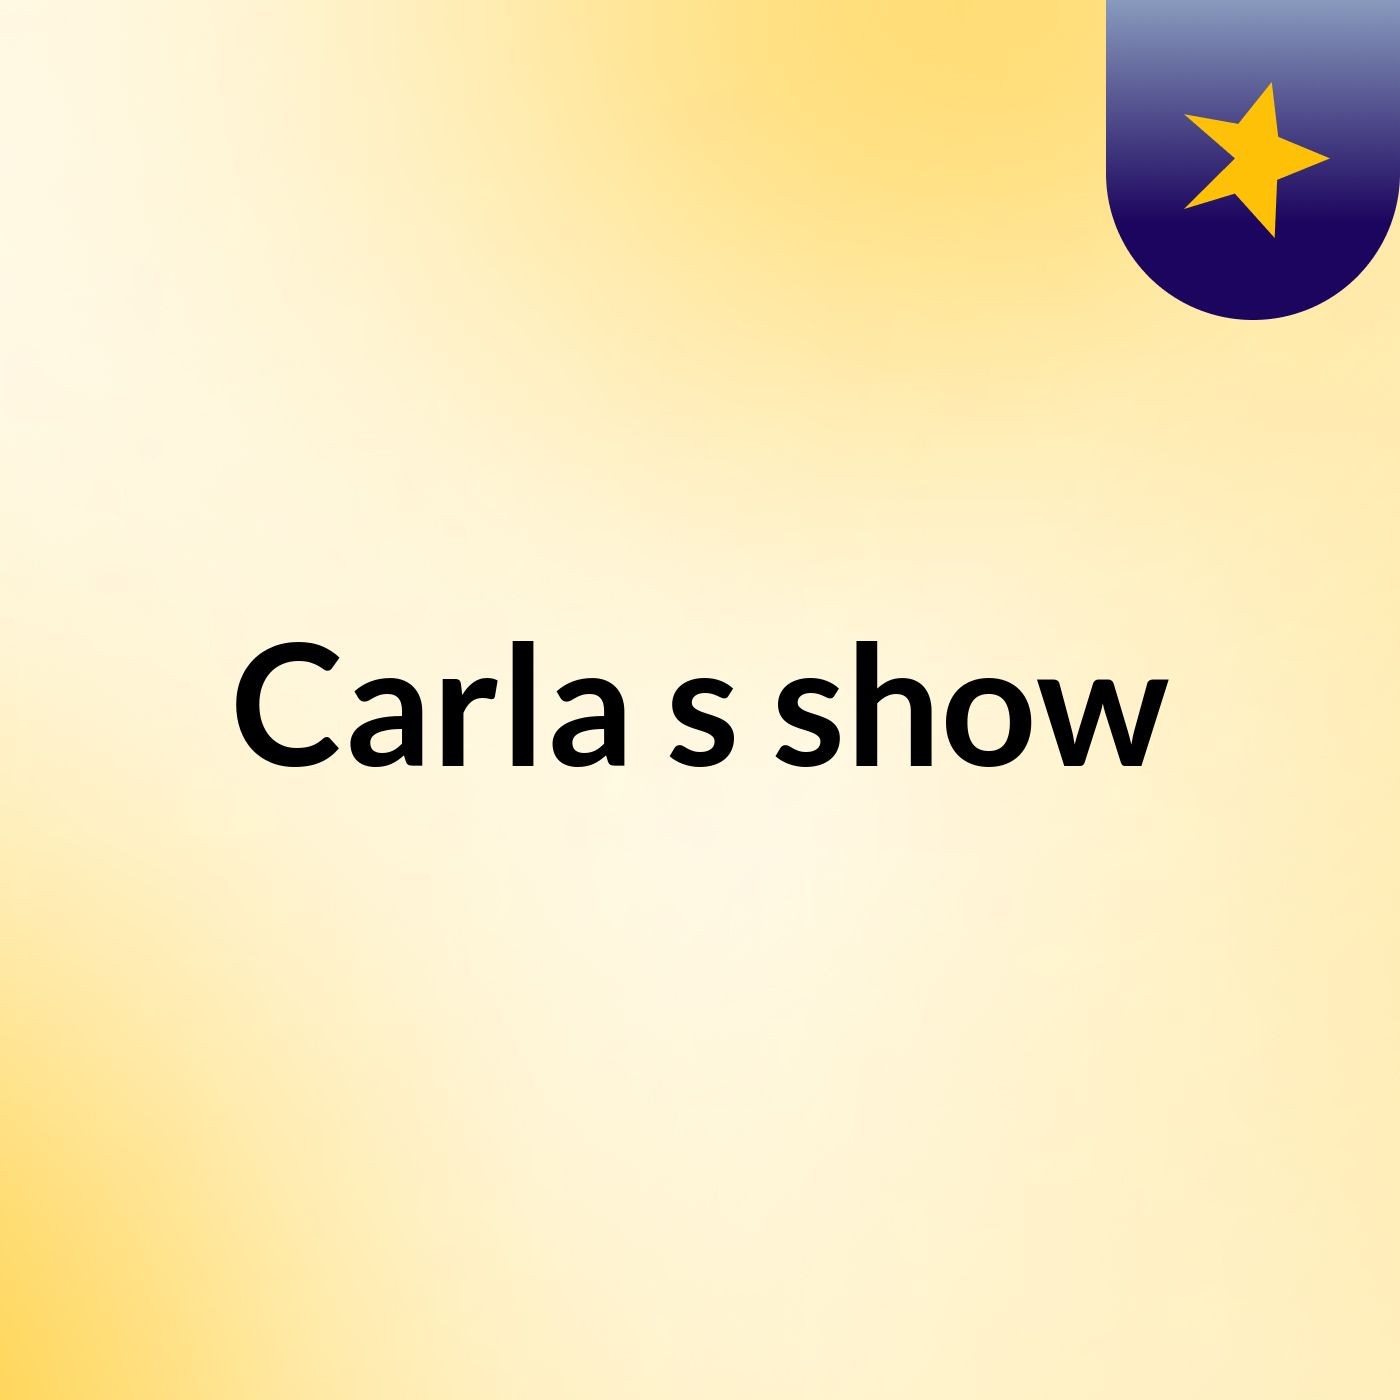 Carla's show